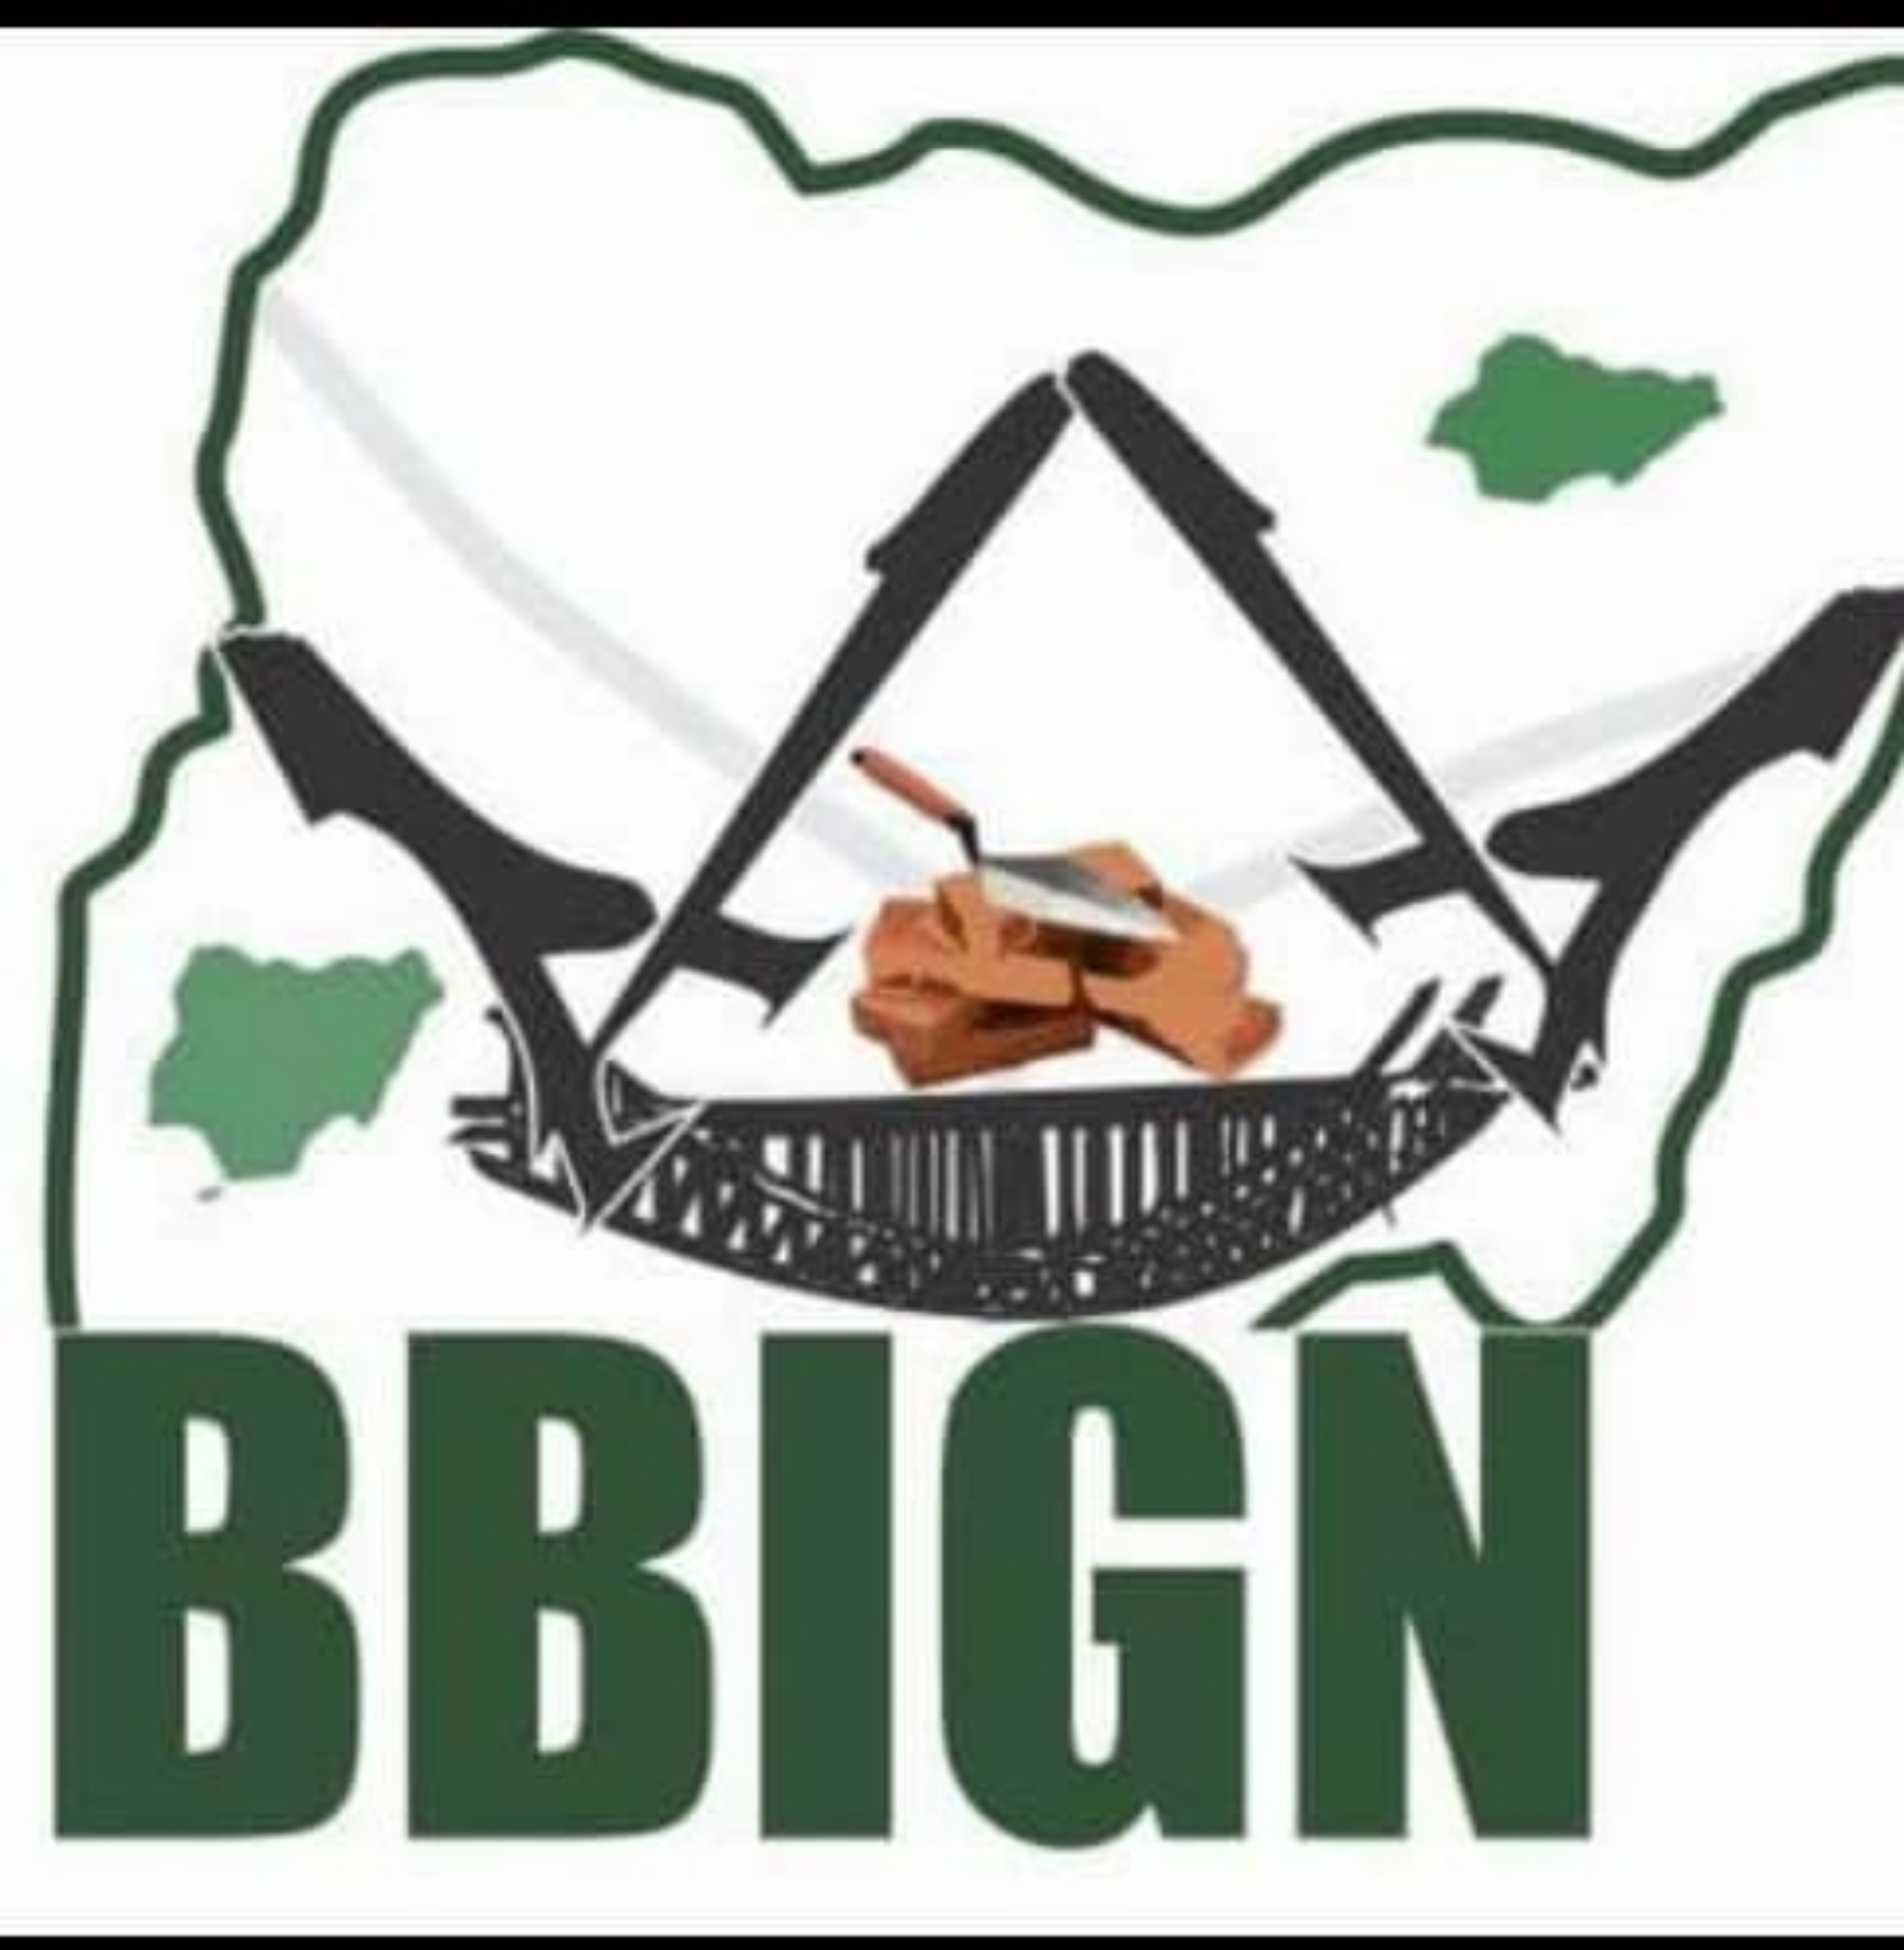 Bridge Builders Initiative For Green Nigeria.